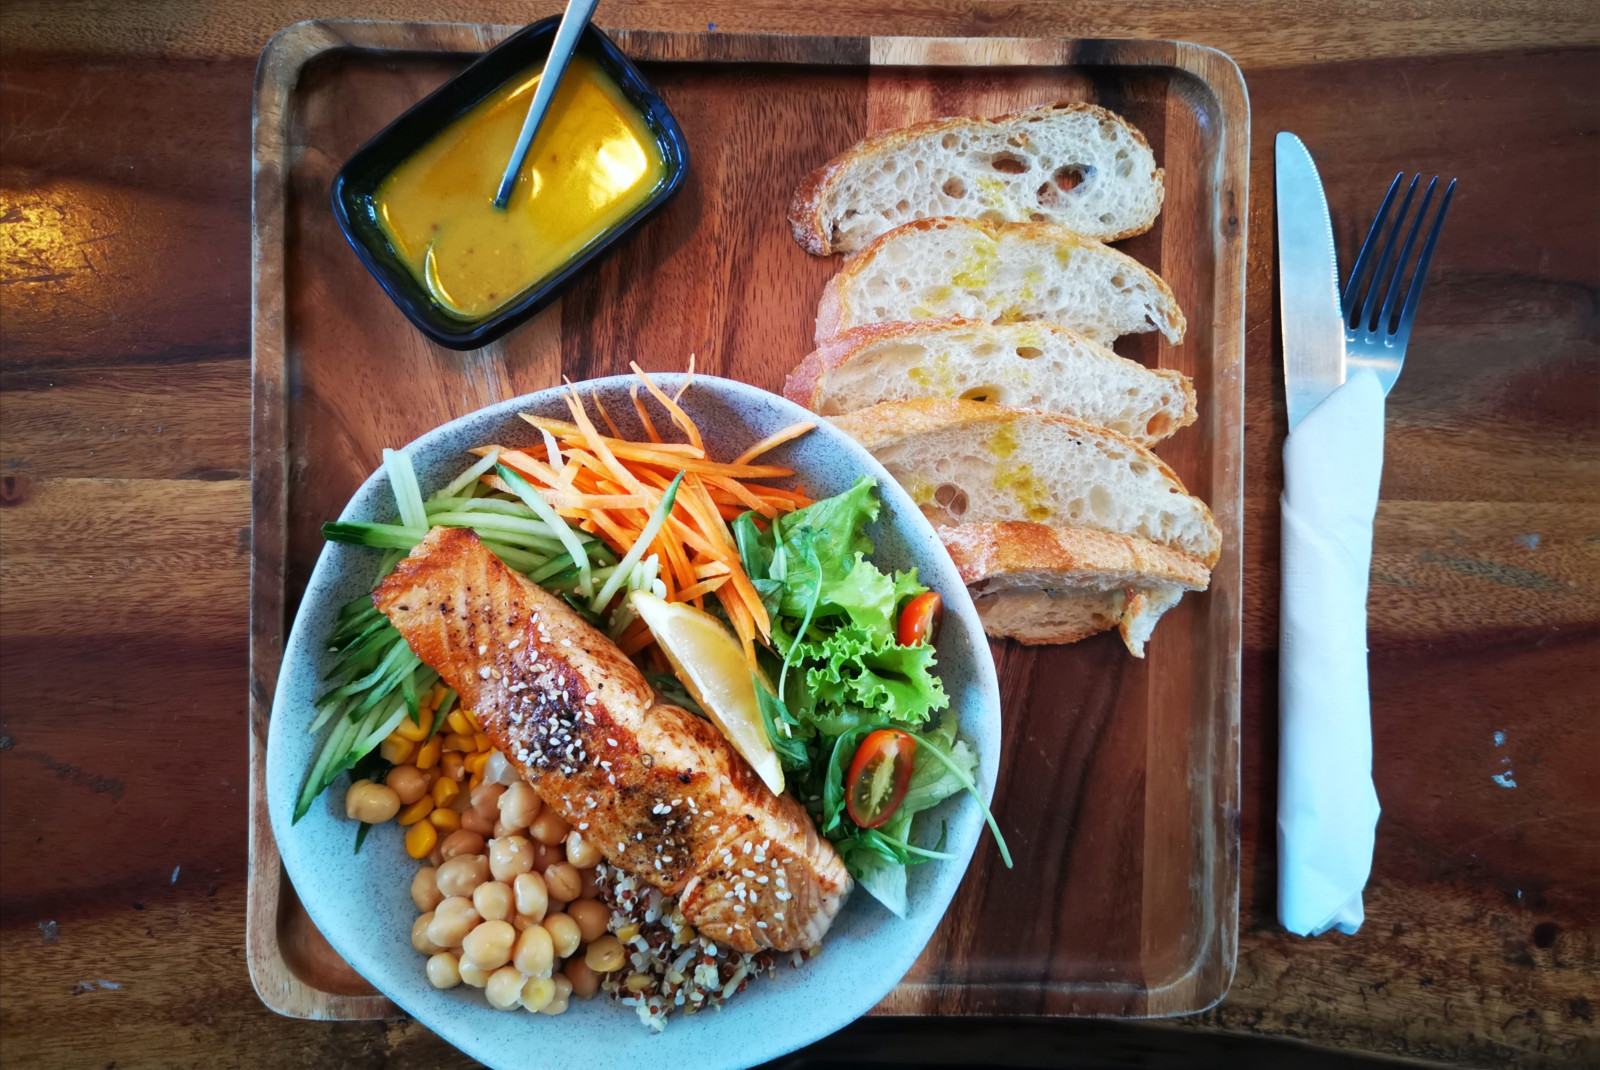 plate of salmon and veggies on brown table